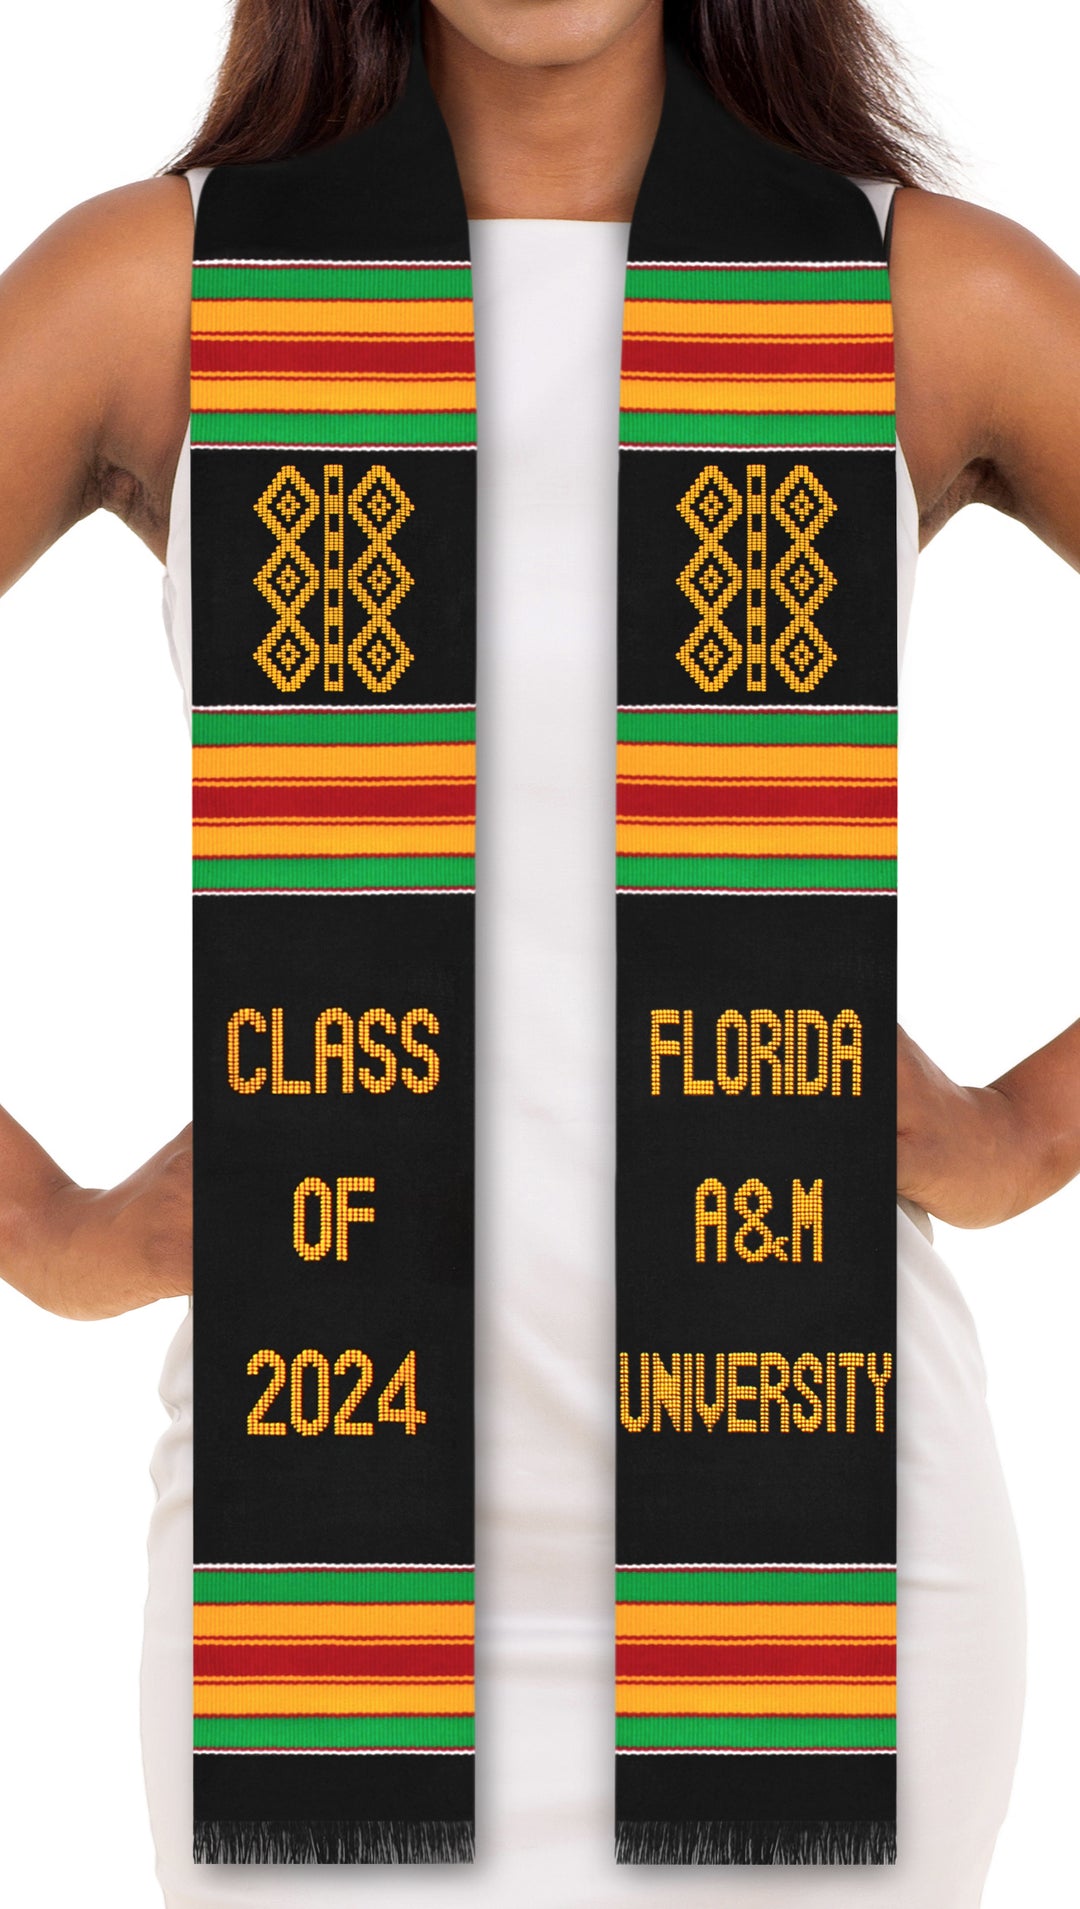 Florida A&M University (FAMU) Class of 2024 Kente Graduation Stole